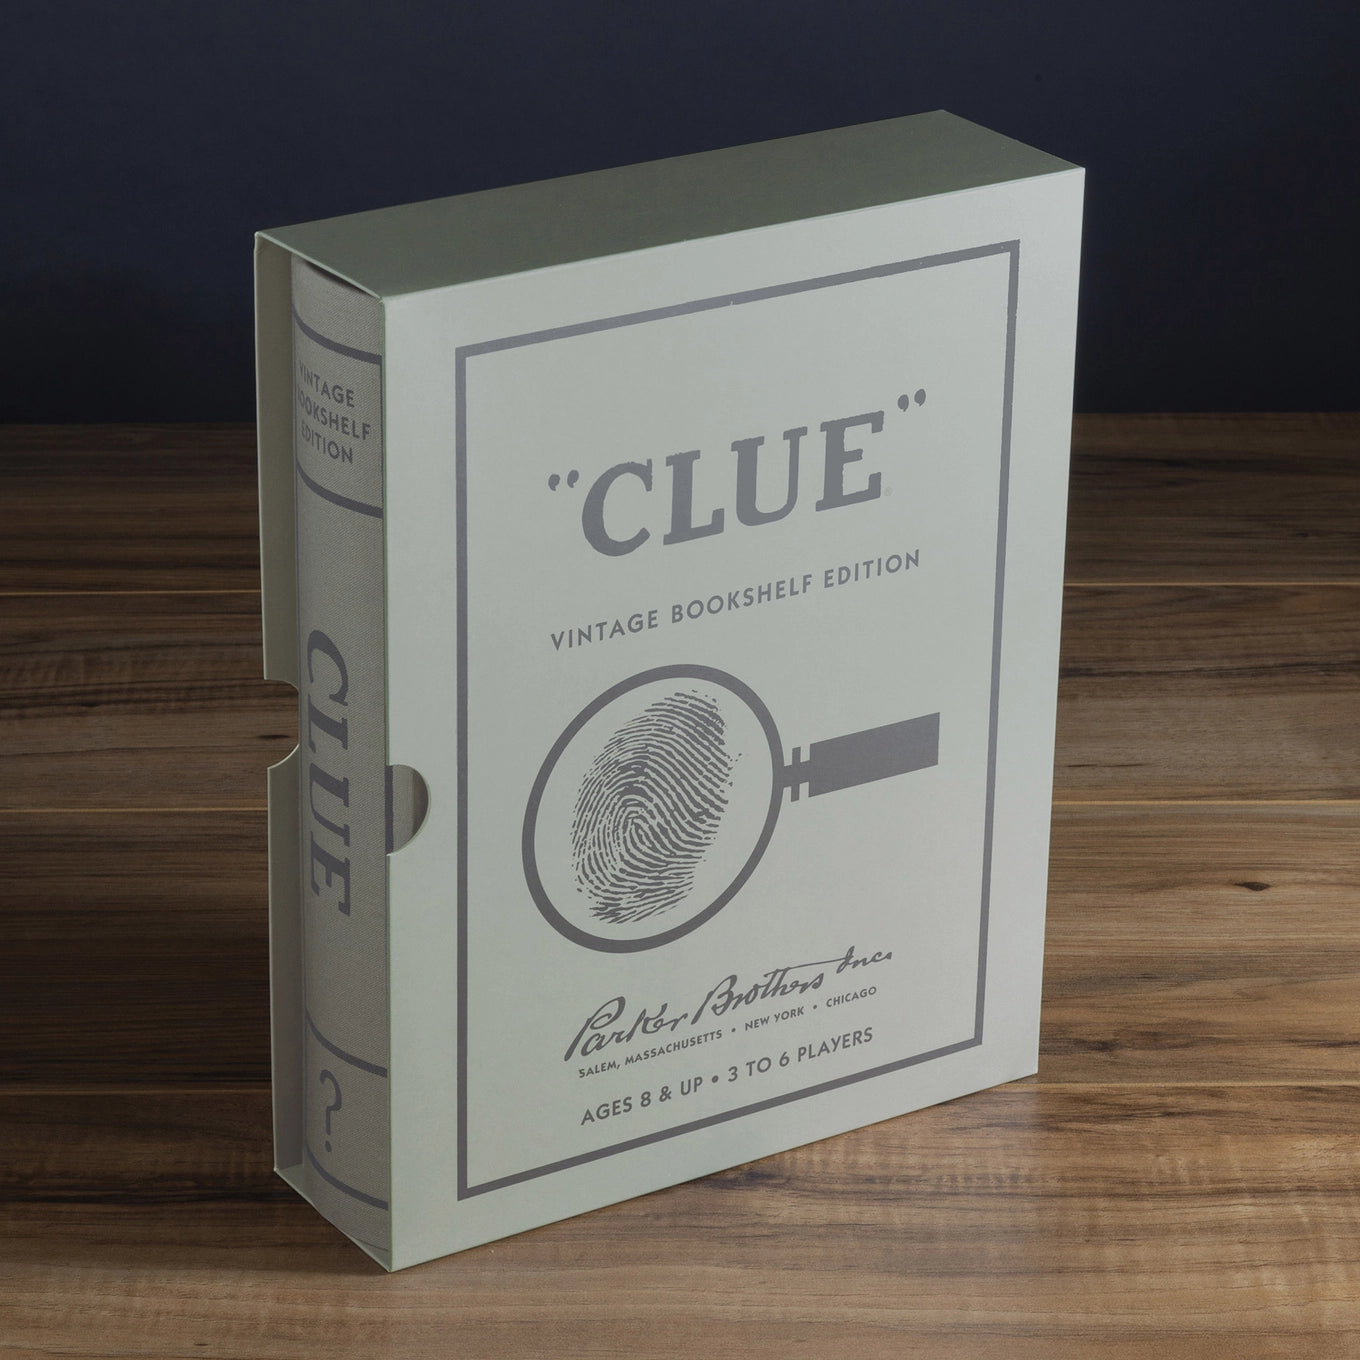 Clue Board Game Vintage Bookshelf Edition